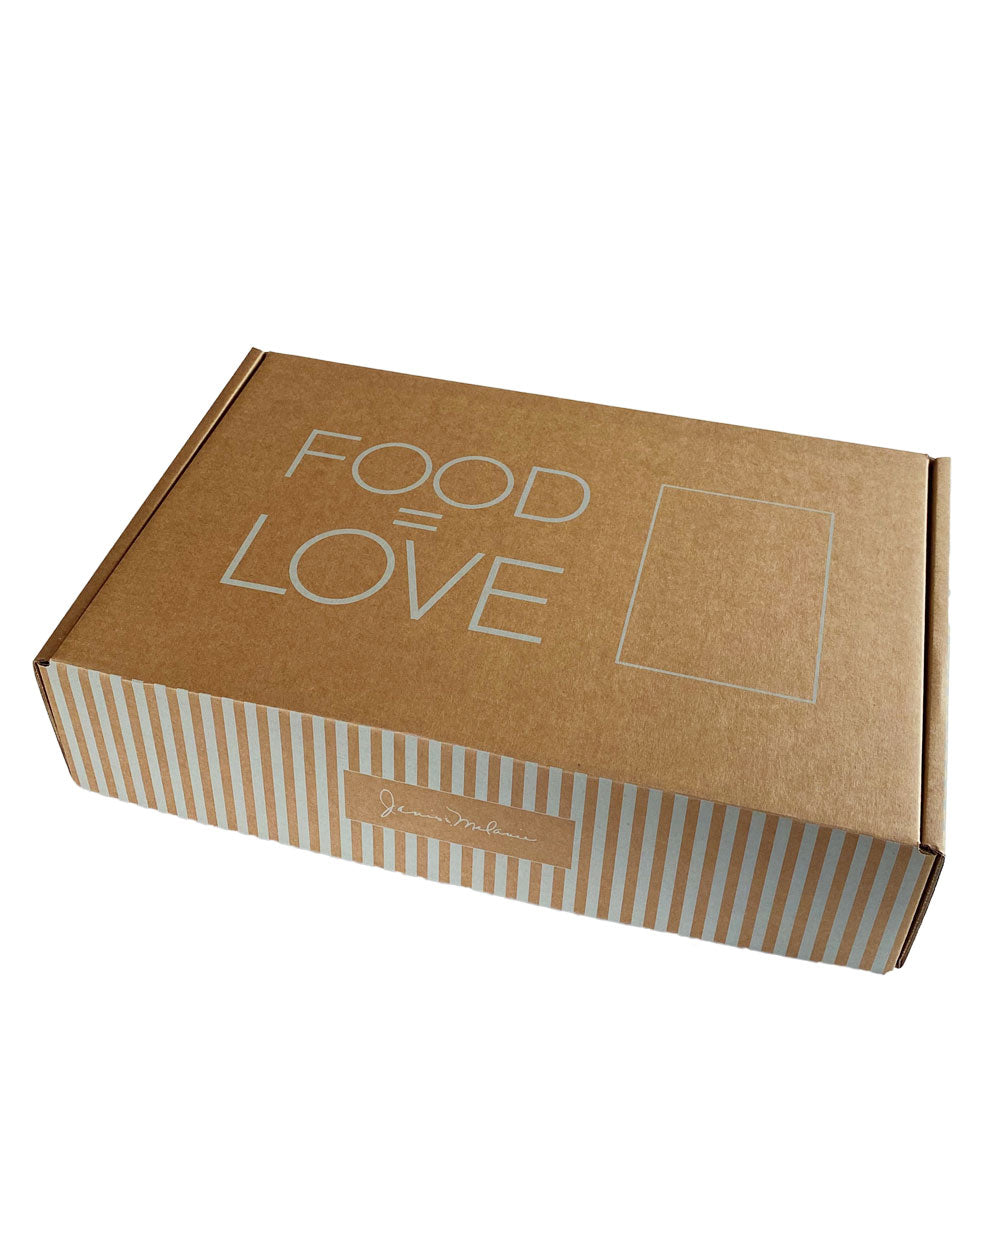 FOOD=LOVE Favorite Treats Gift